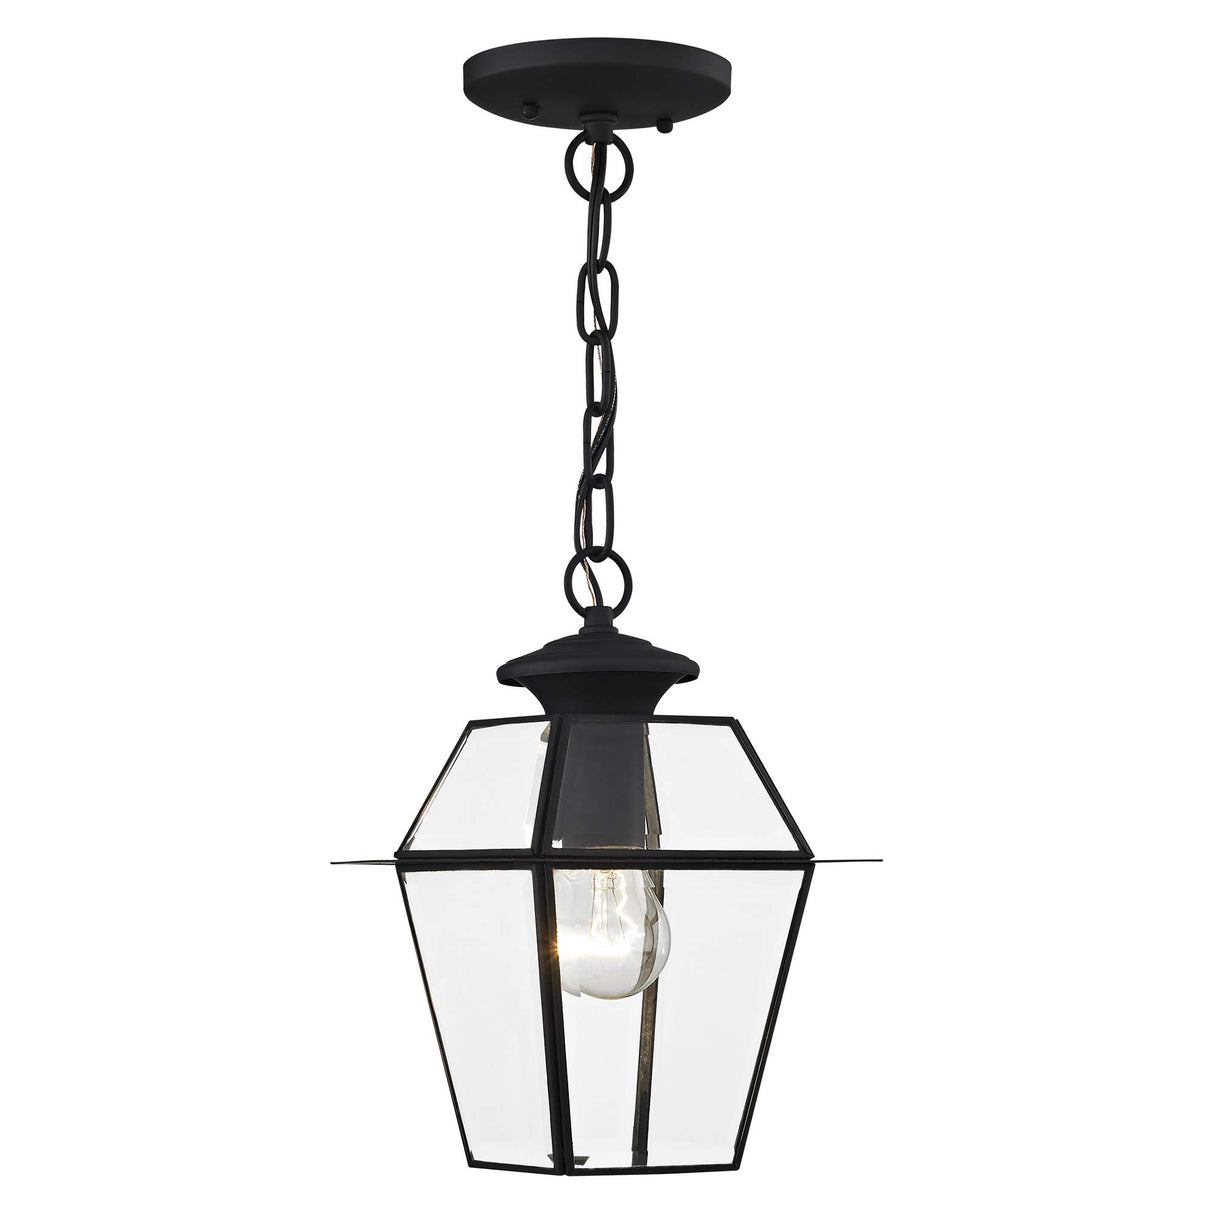 Livex Lighting 2183-04 Westover 1-Light Outdoor Hanging Lantern, Black